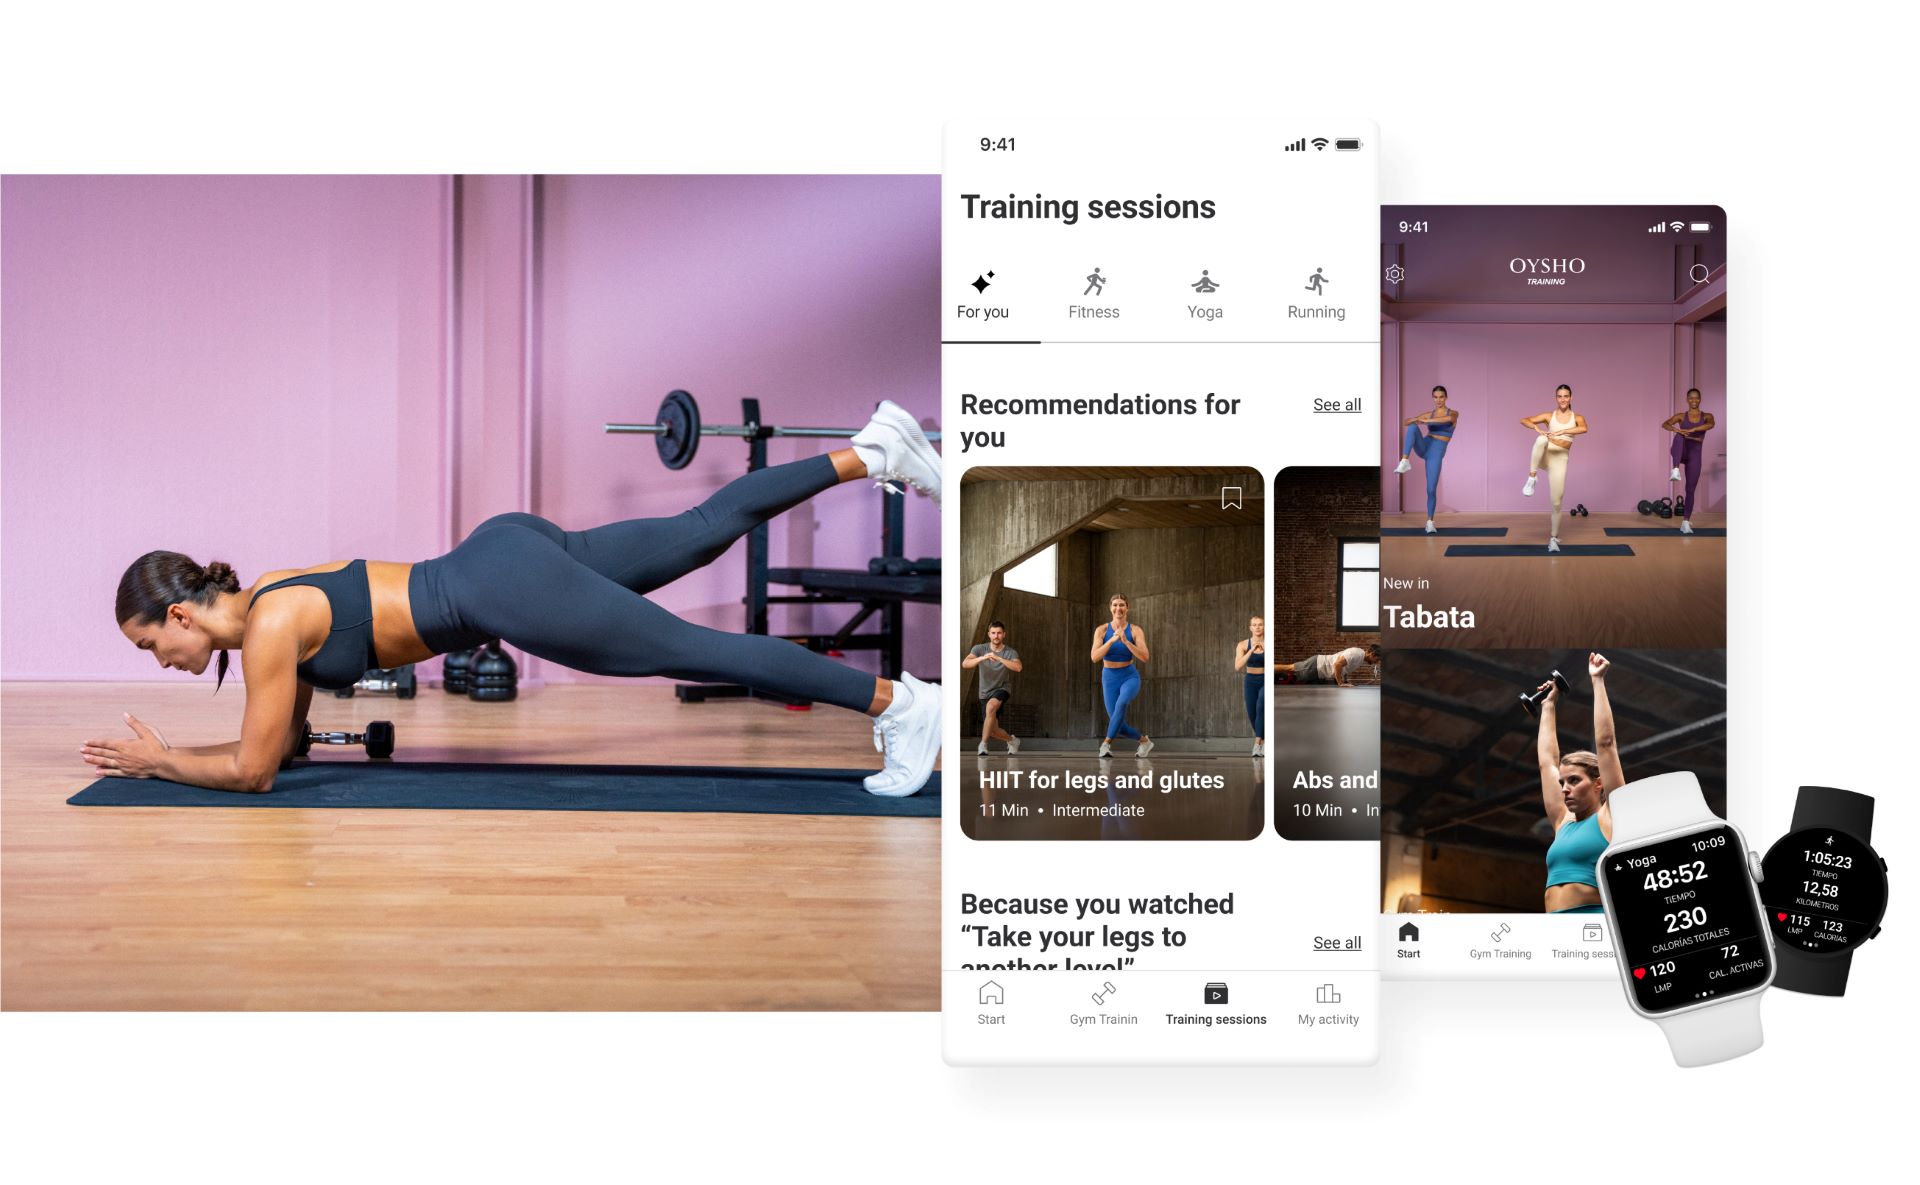 OYSHO TRAINING - free yoga classes on the app 